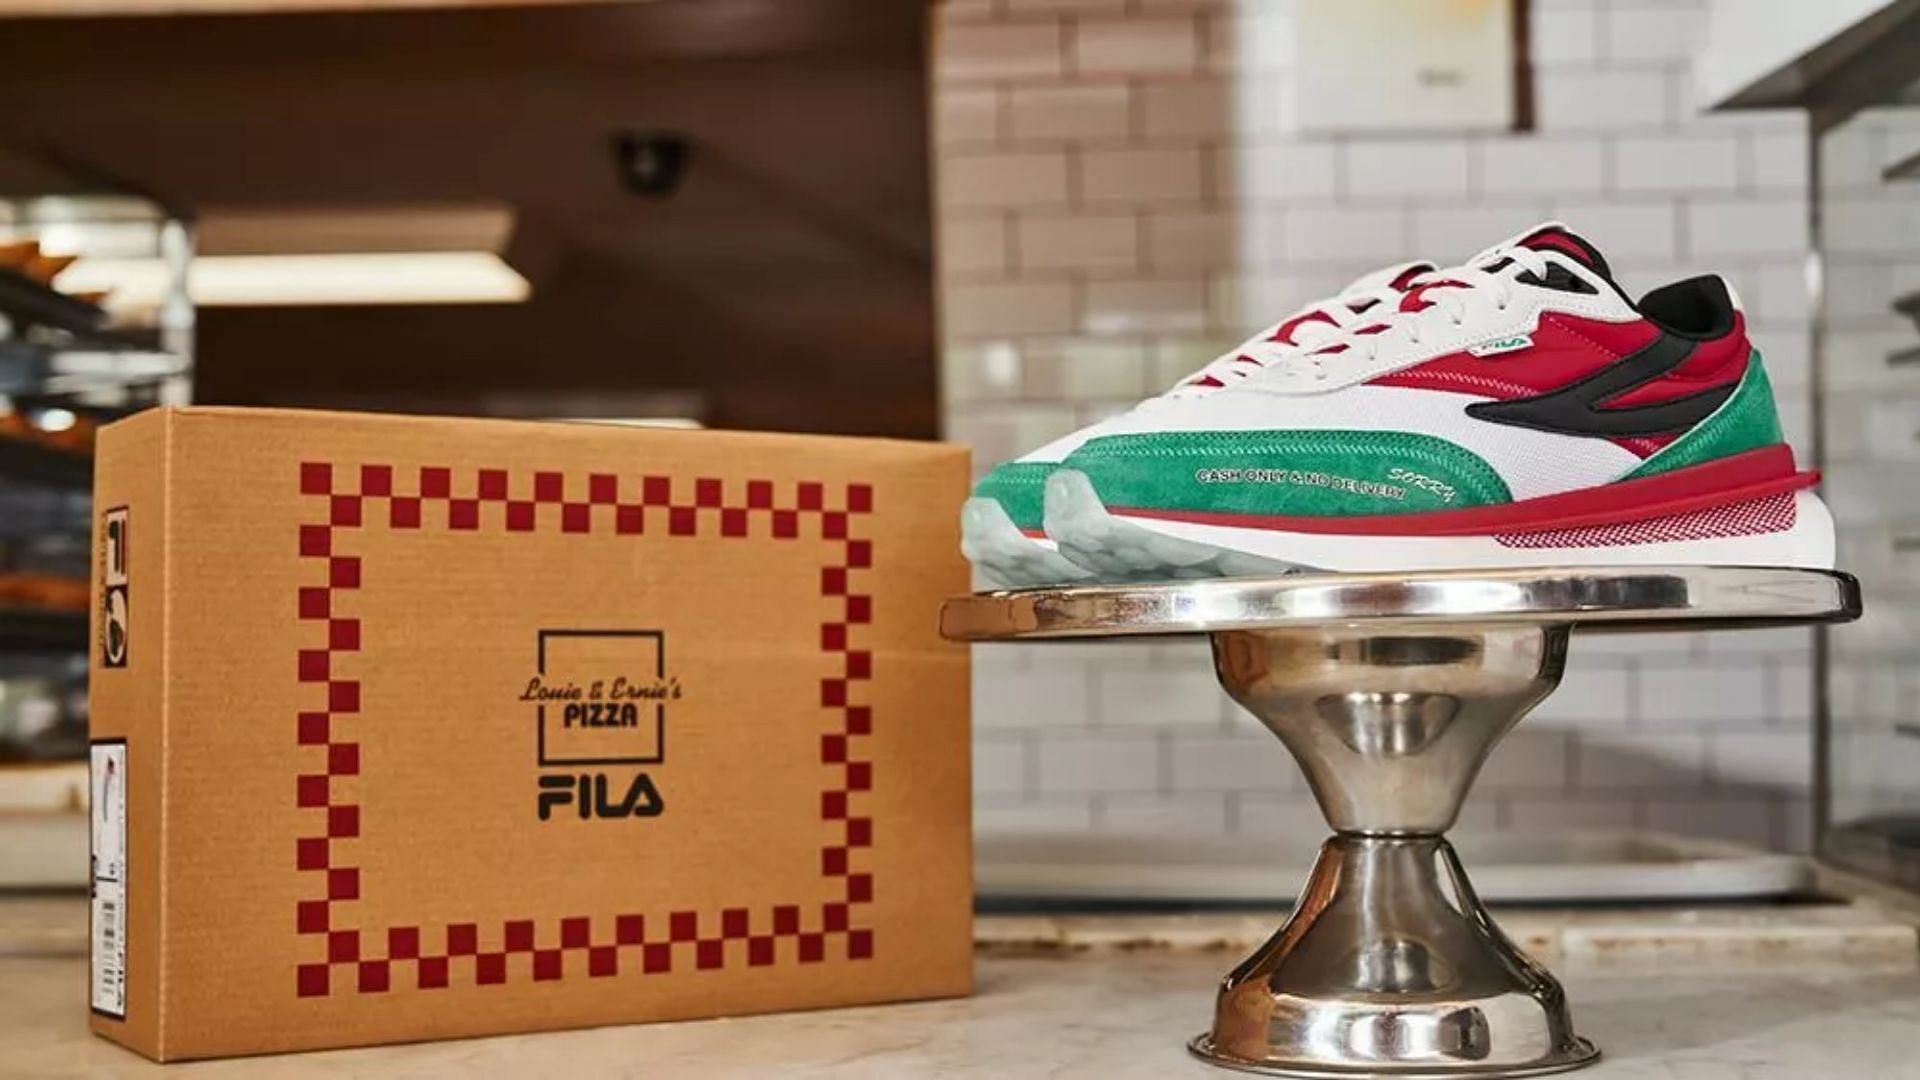 Fila x NYC pizzerias sneaker collection (Image via Fila)